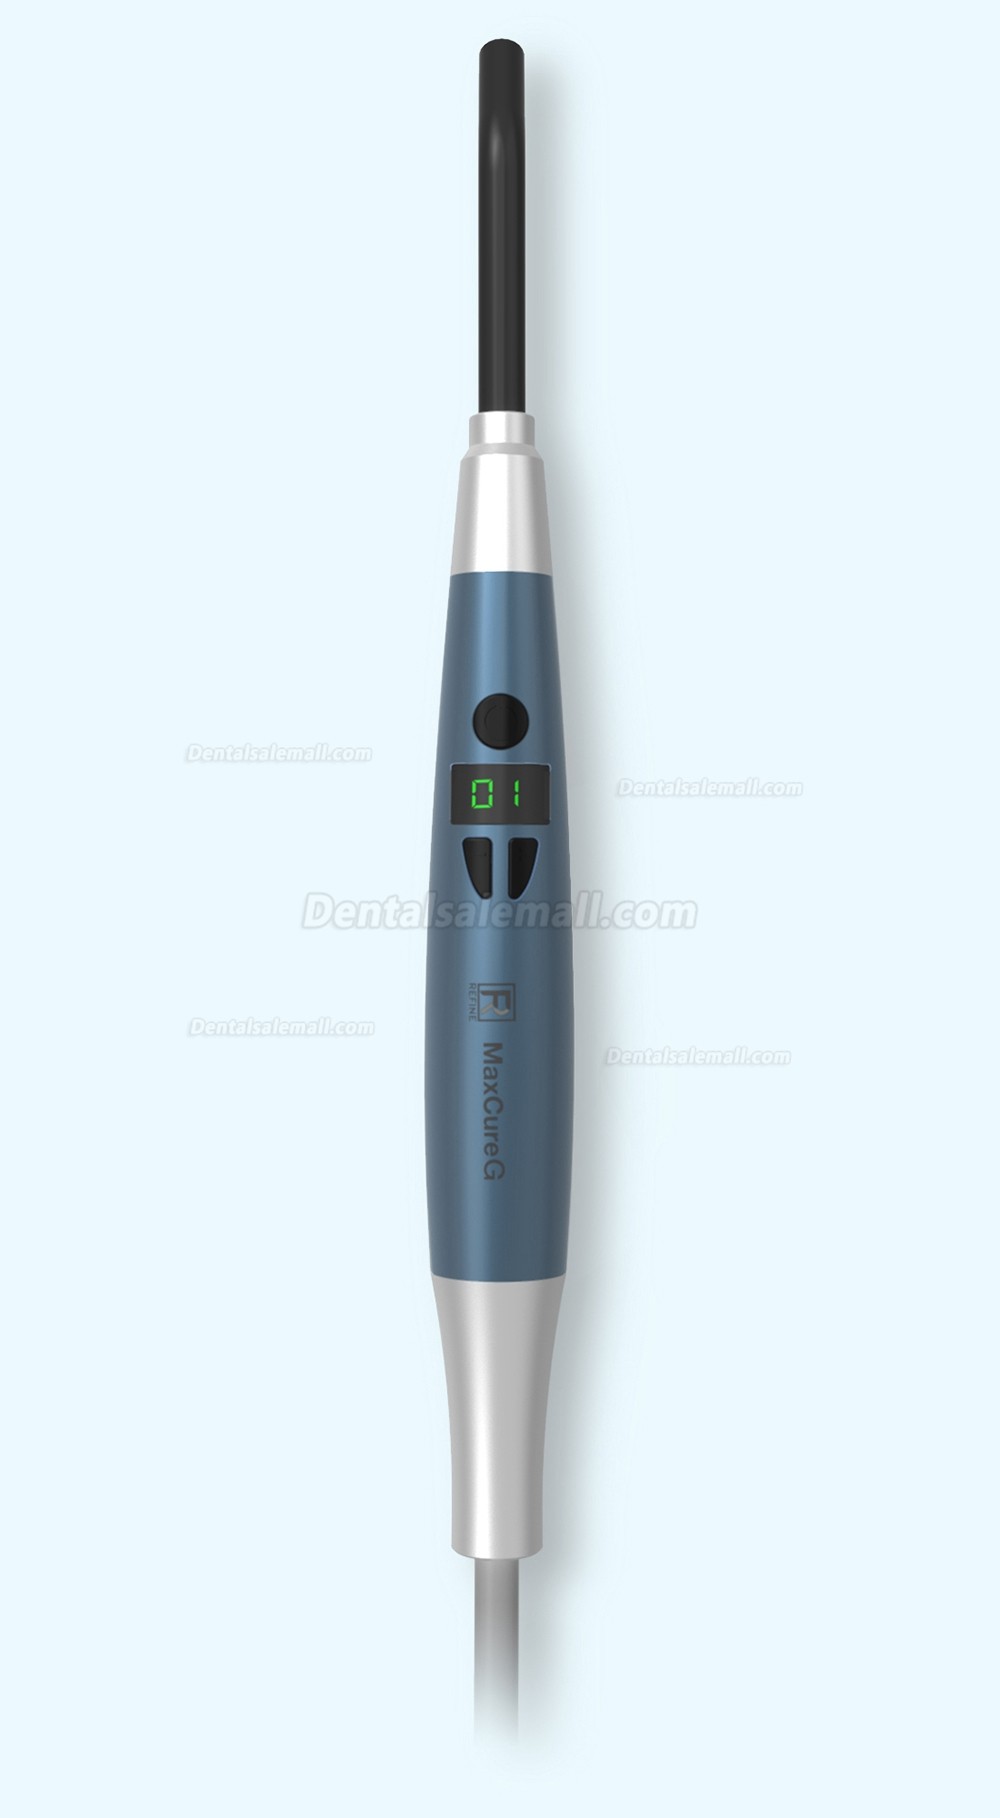 Refine MaxCureG Dental Wired LED Curging Light 1000m/cm2 –2500mW/cm2